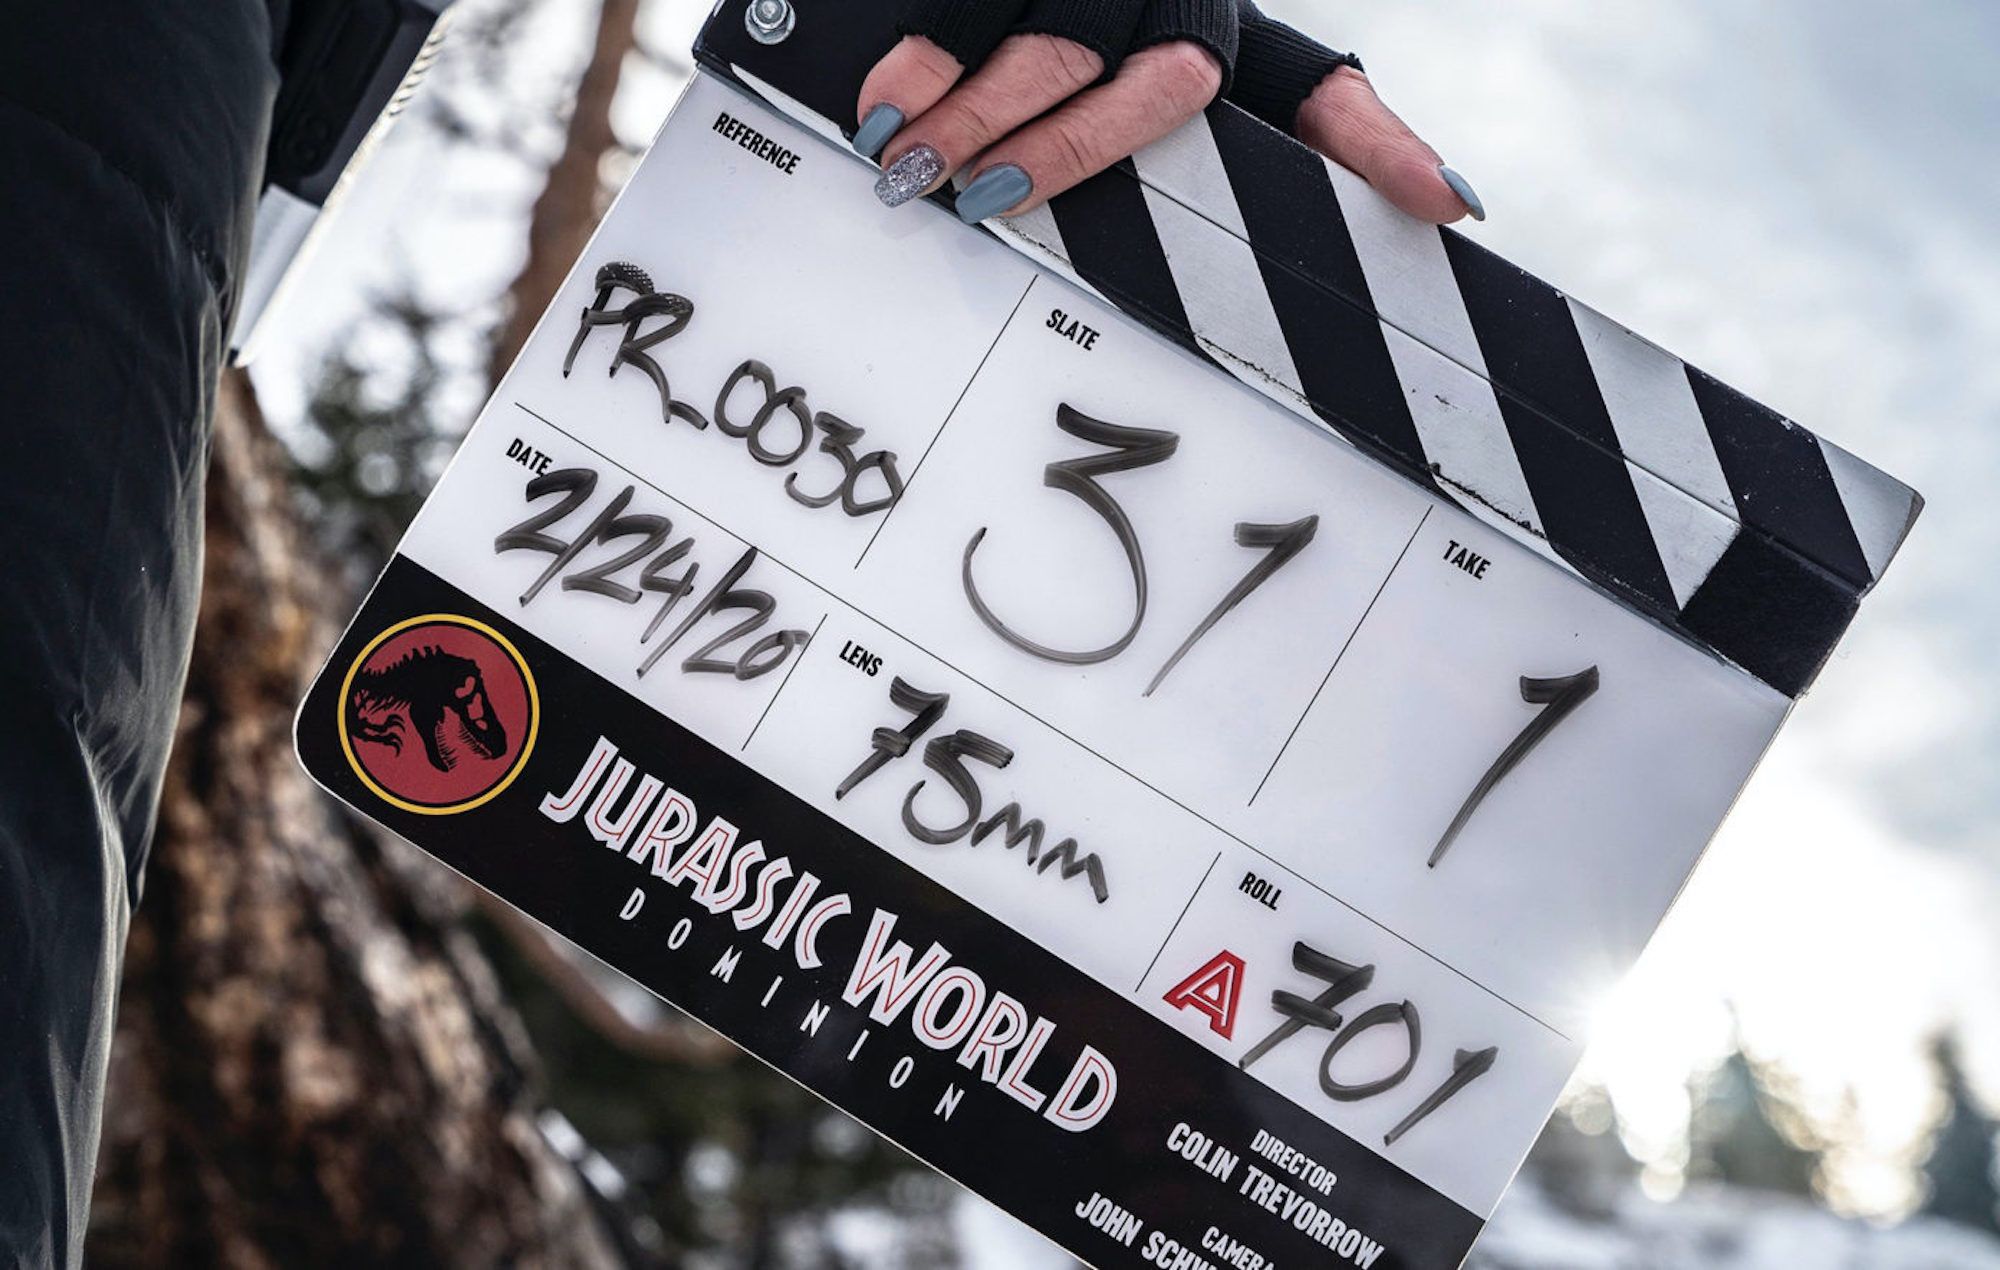 New on set photo from 'Jurassic World 3' emerge